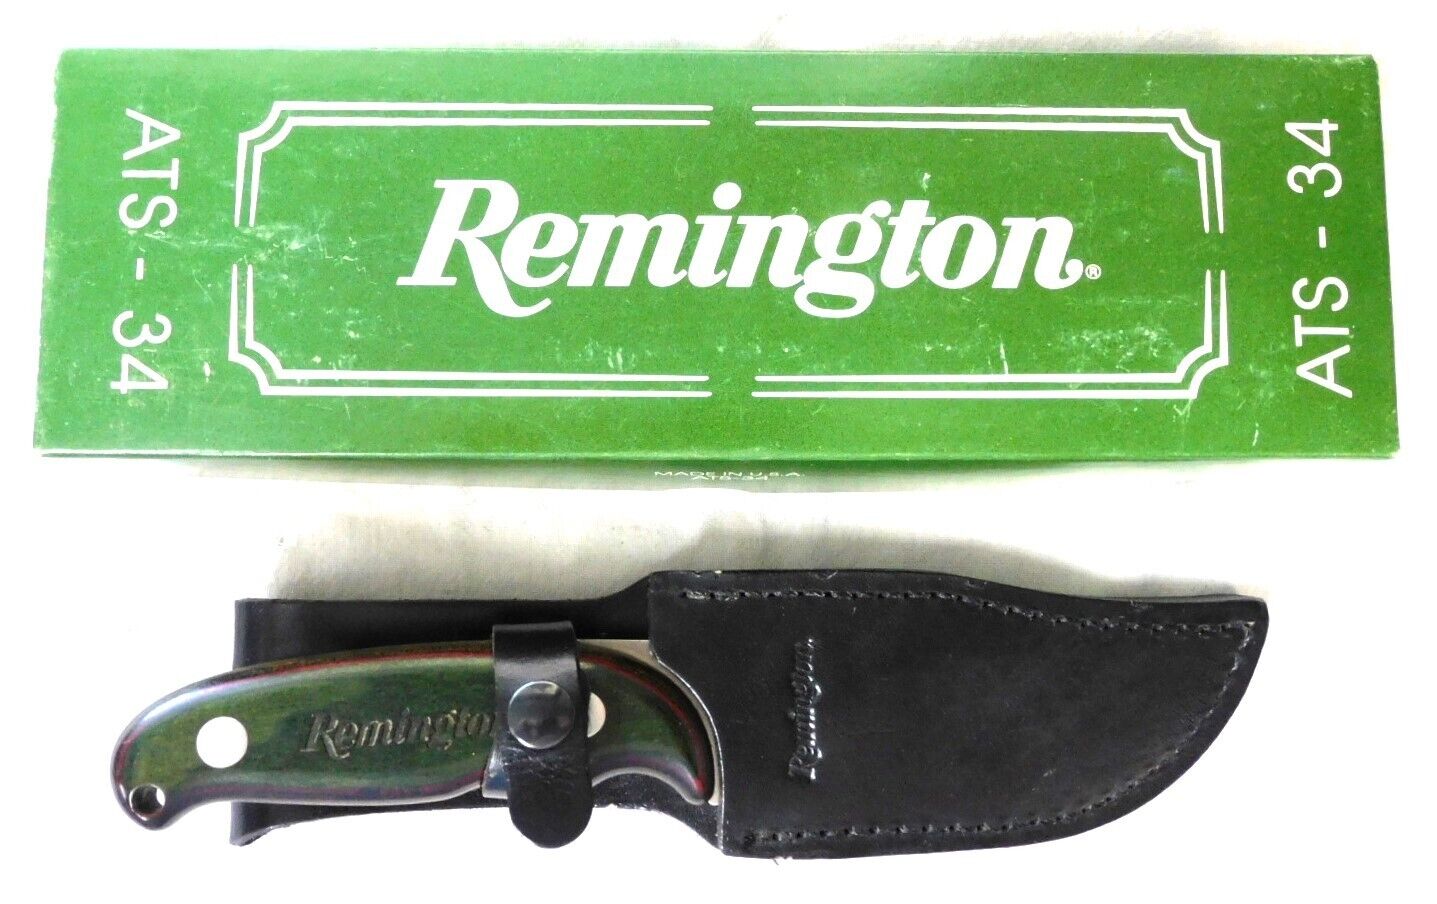 vInTaGe NOS REMINGTON ATS-34 KNIFE AND SHEATH - BOX & PAPERS - BG